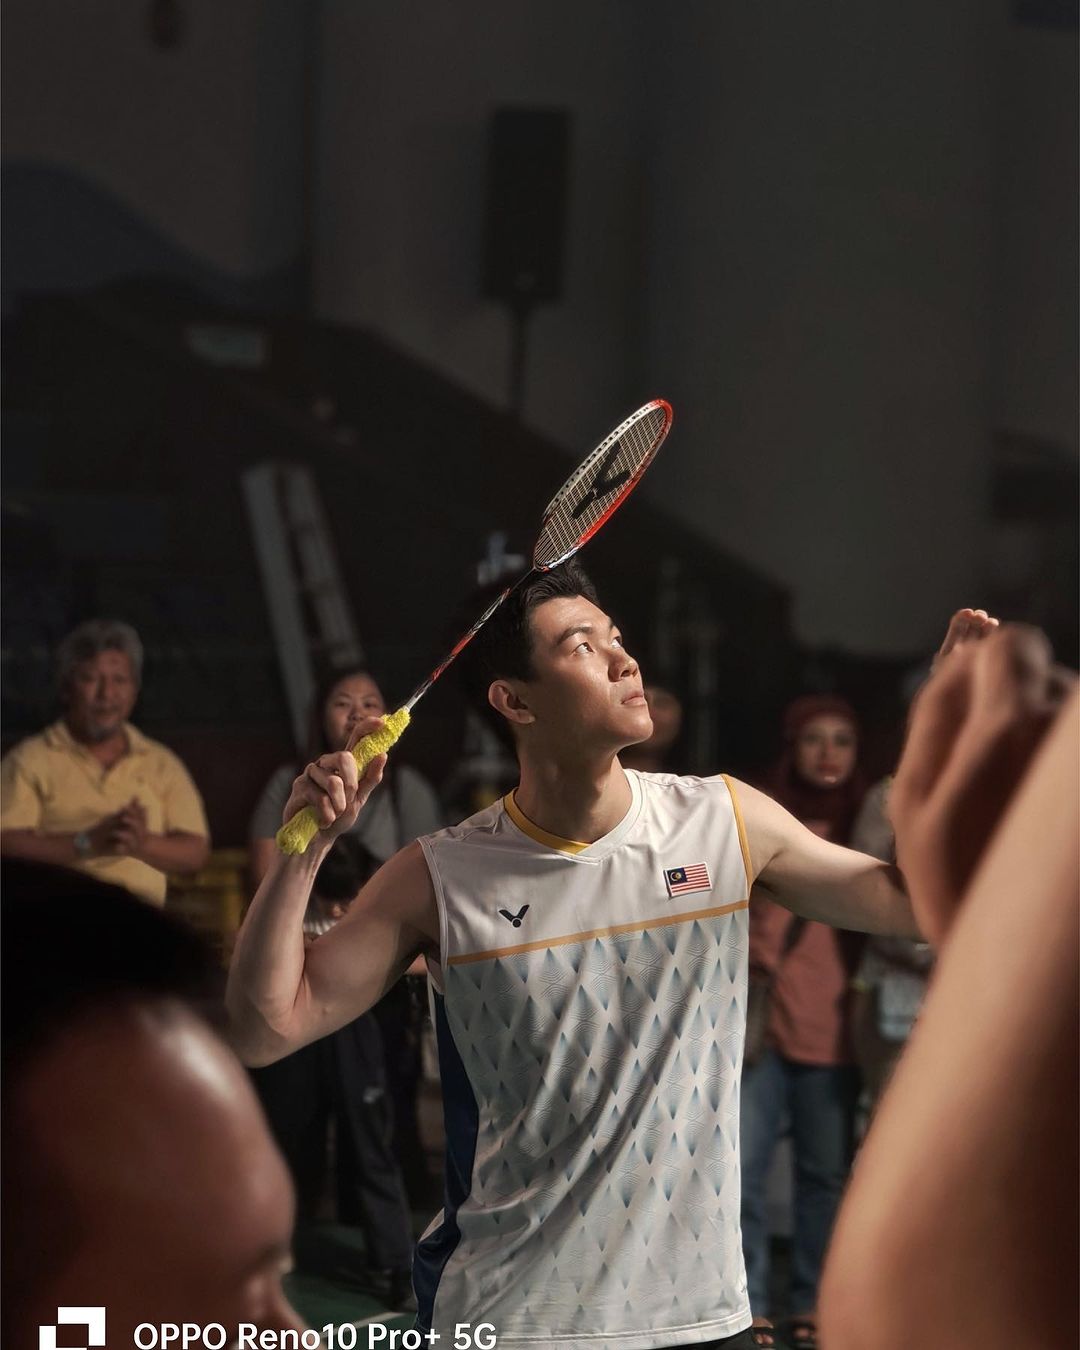 Lee zii jia playing badminton